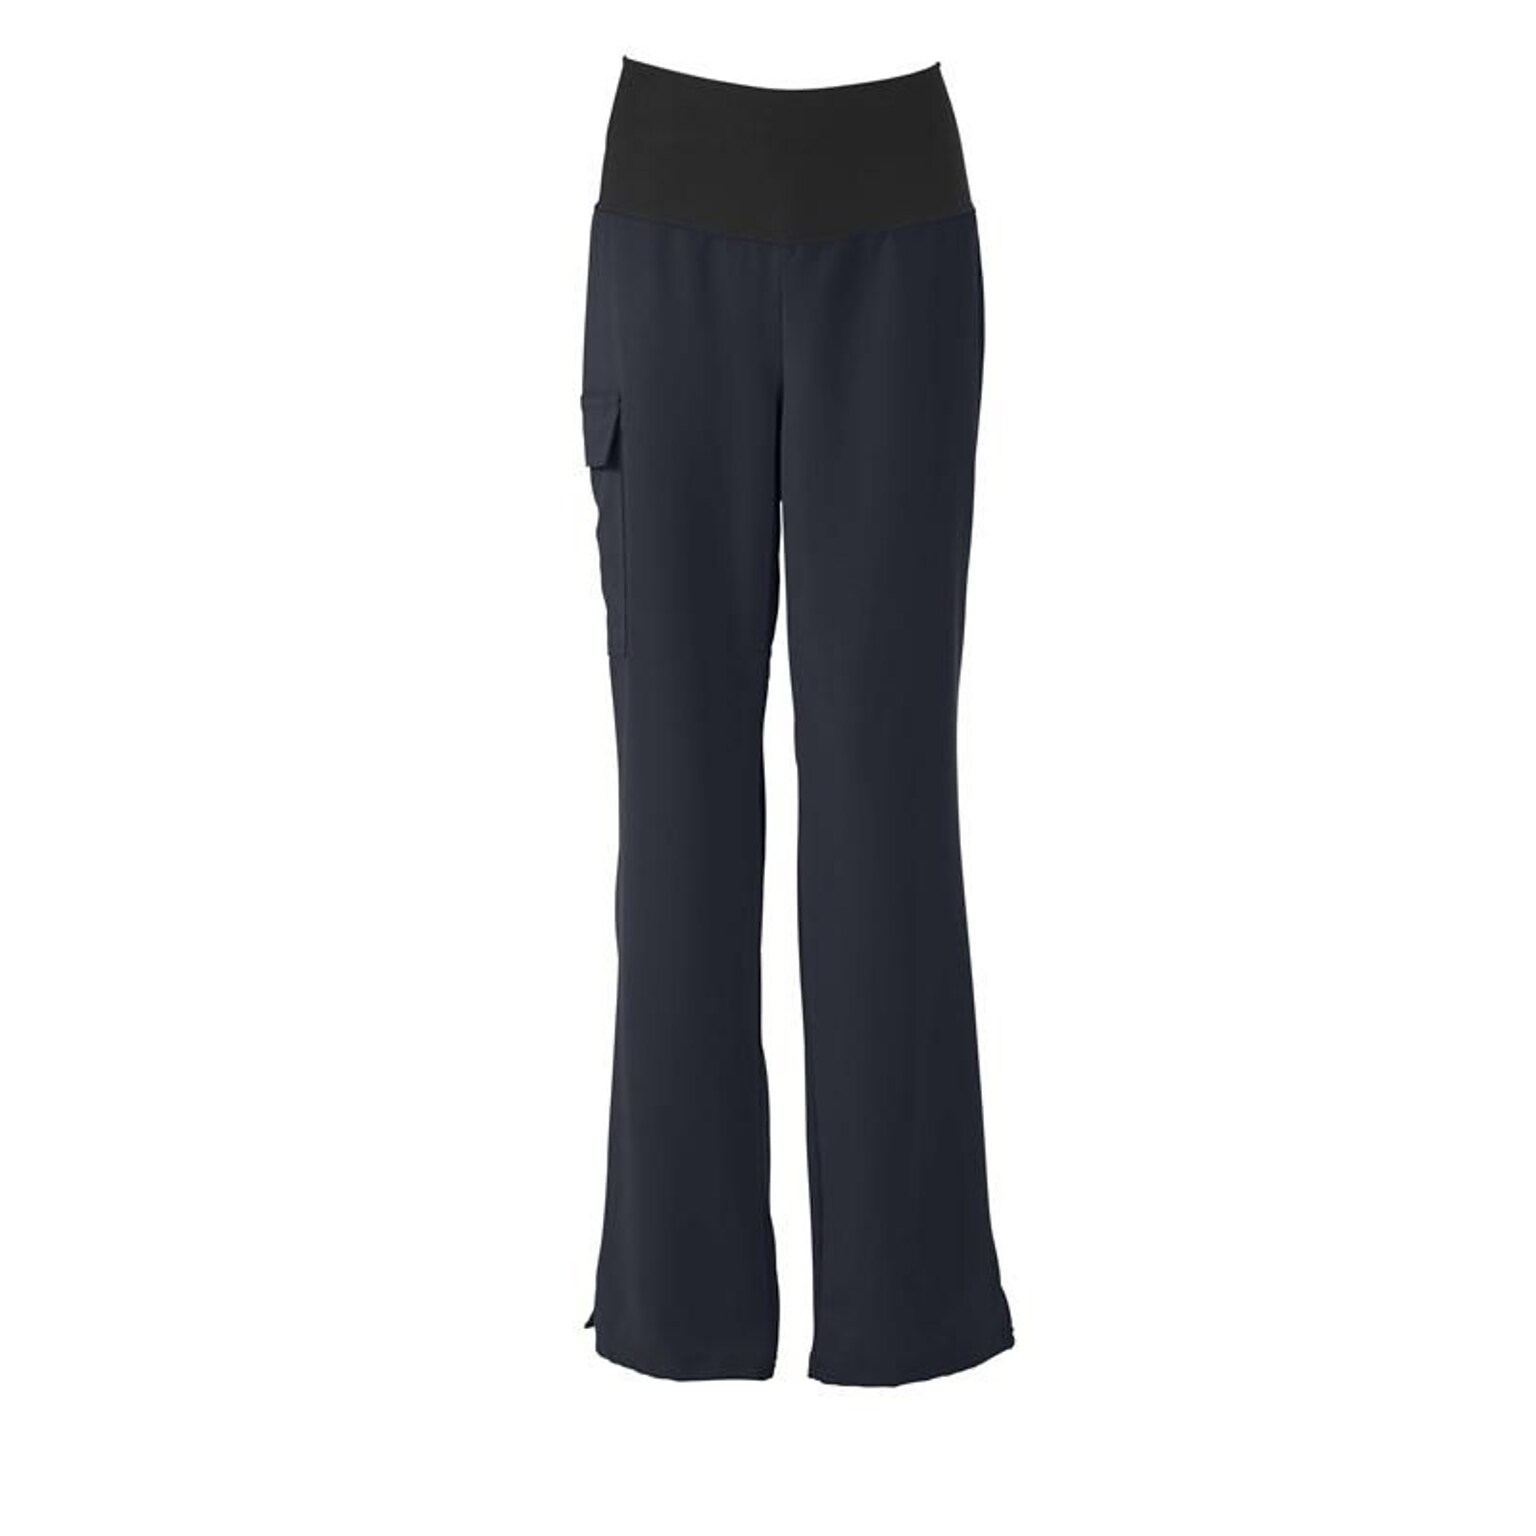 Medline Ocean ave Women Large Tall Yoga Scrub Pants, Navy (5560NVYLT)